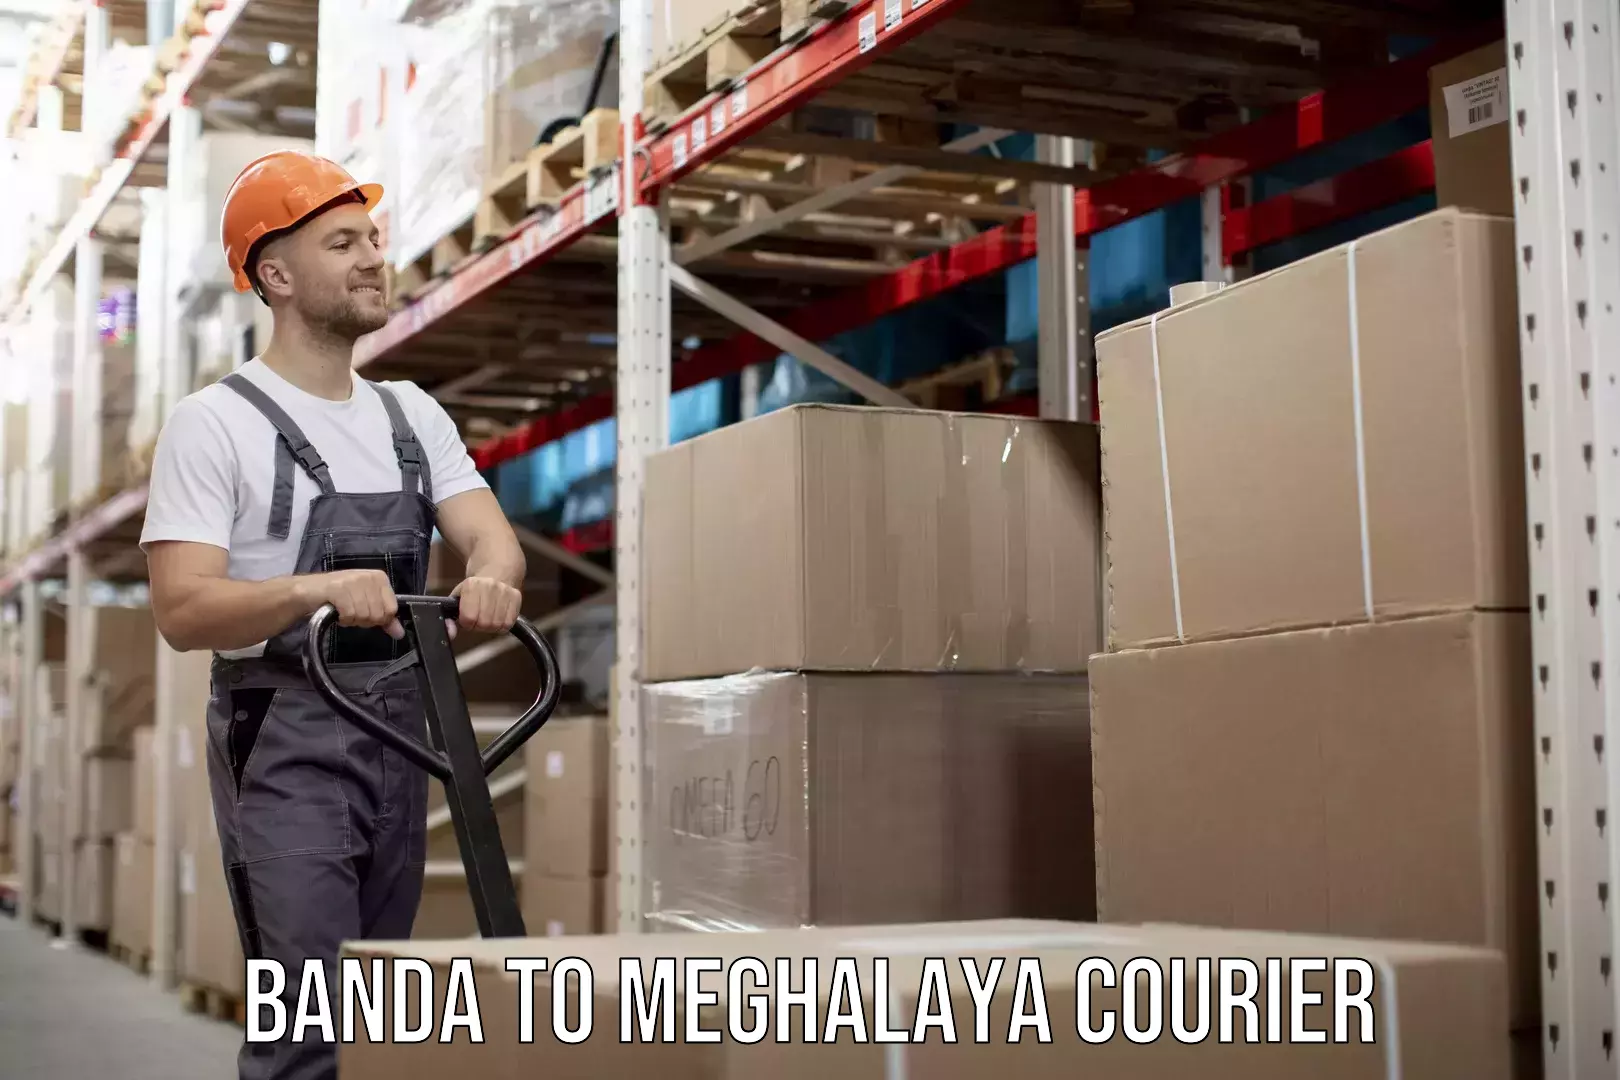 Large package courier Banda to Meghalaya